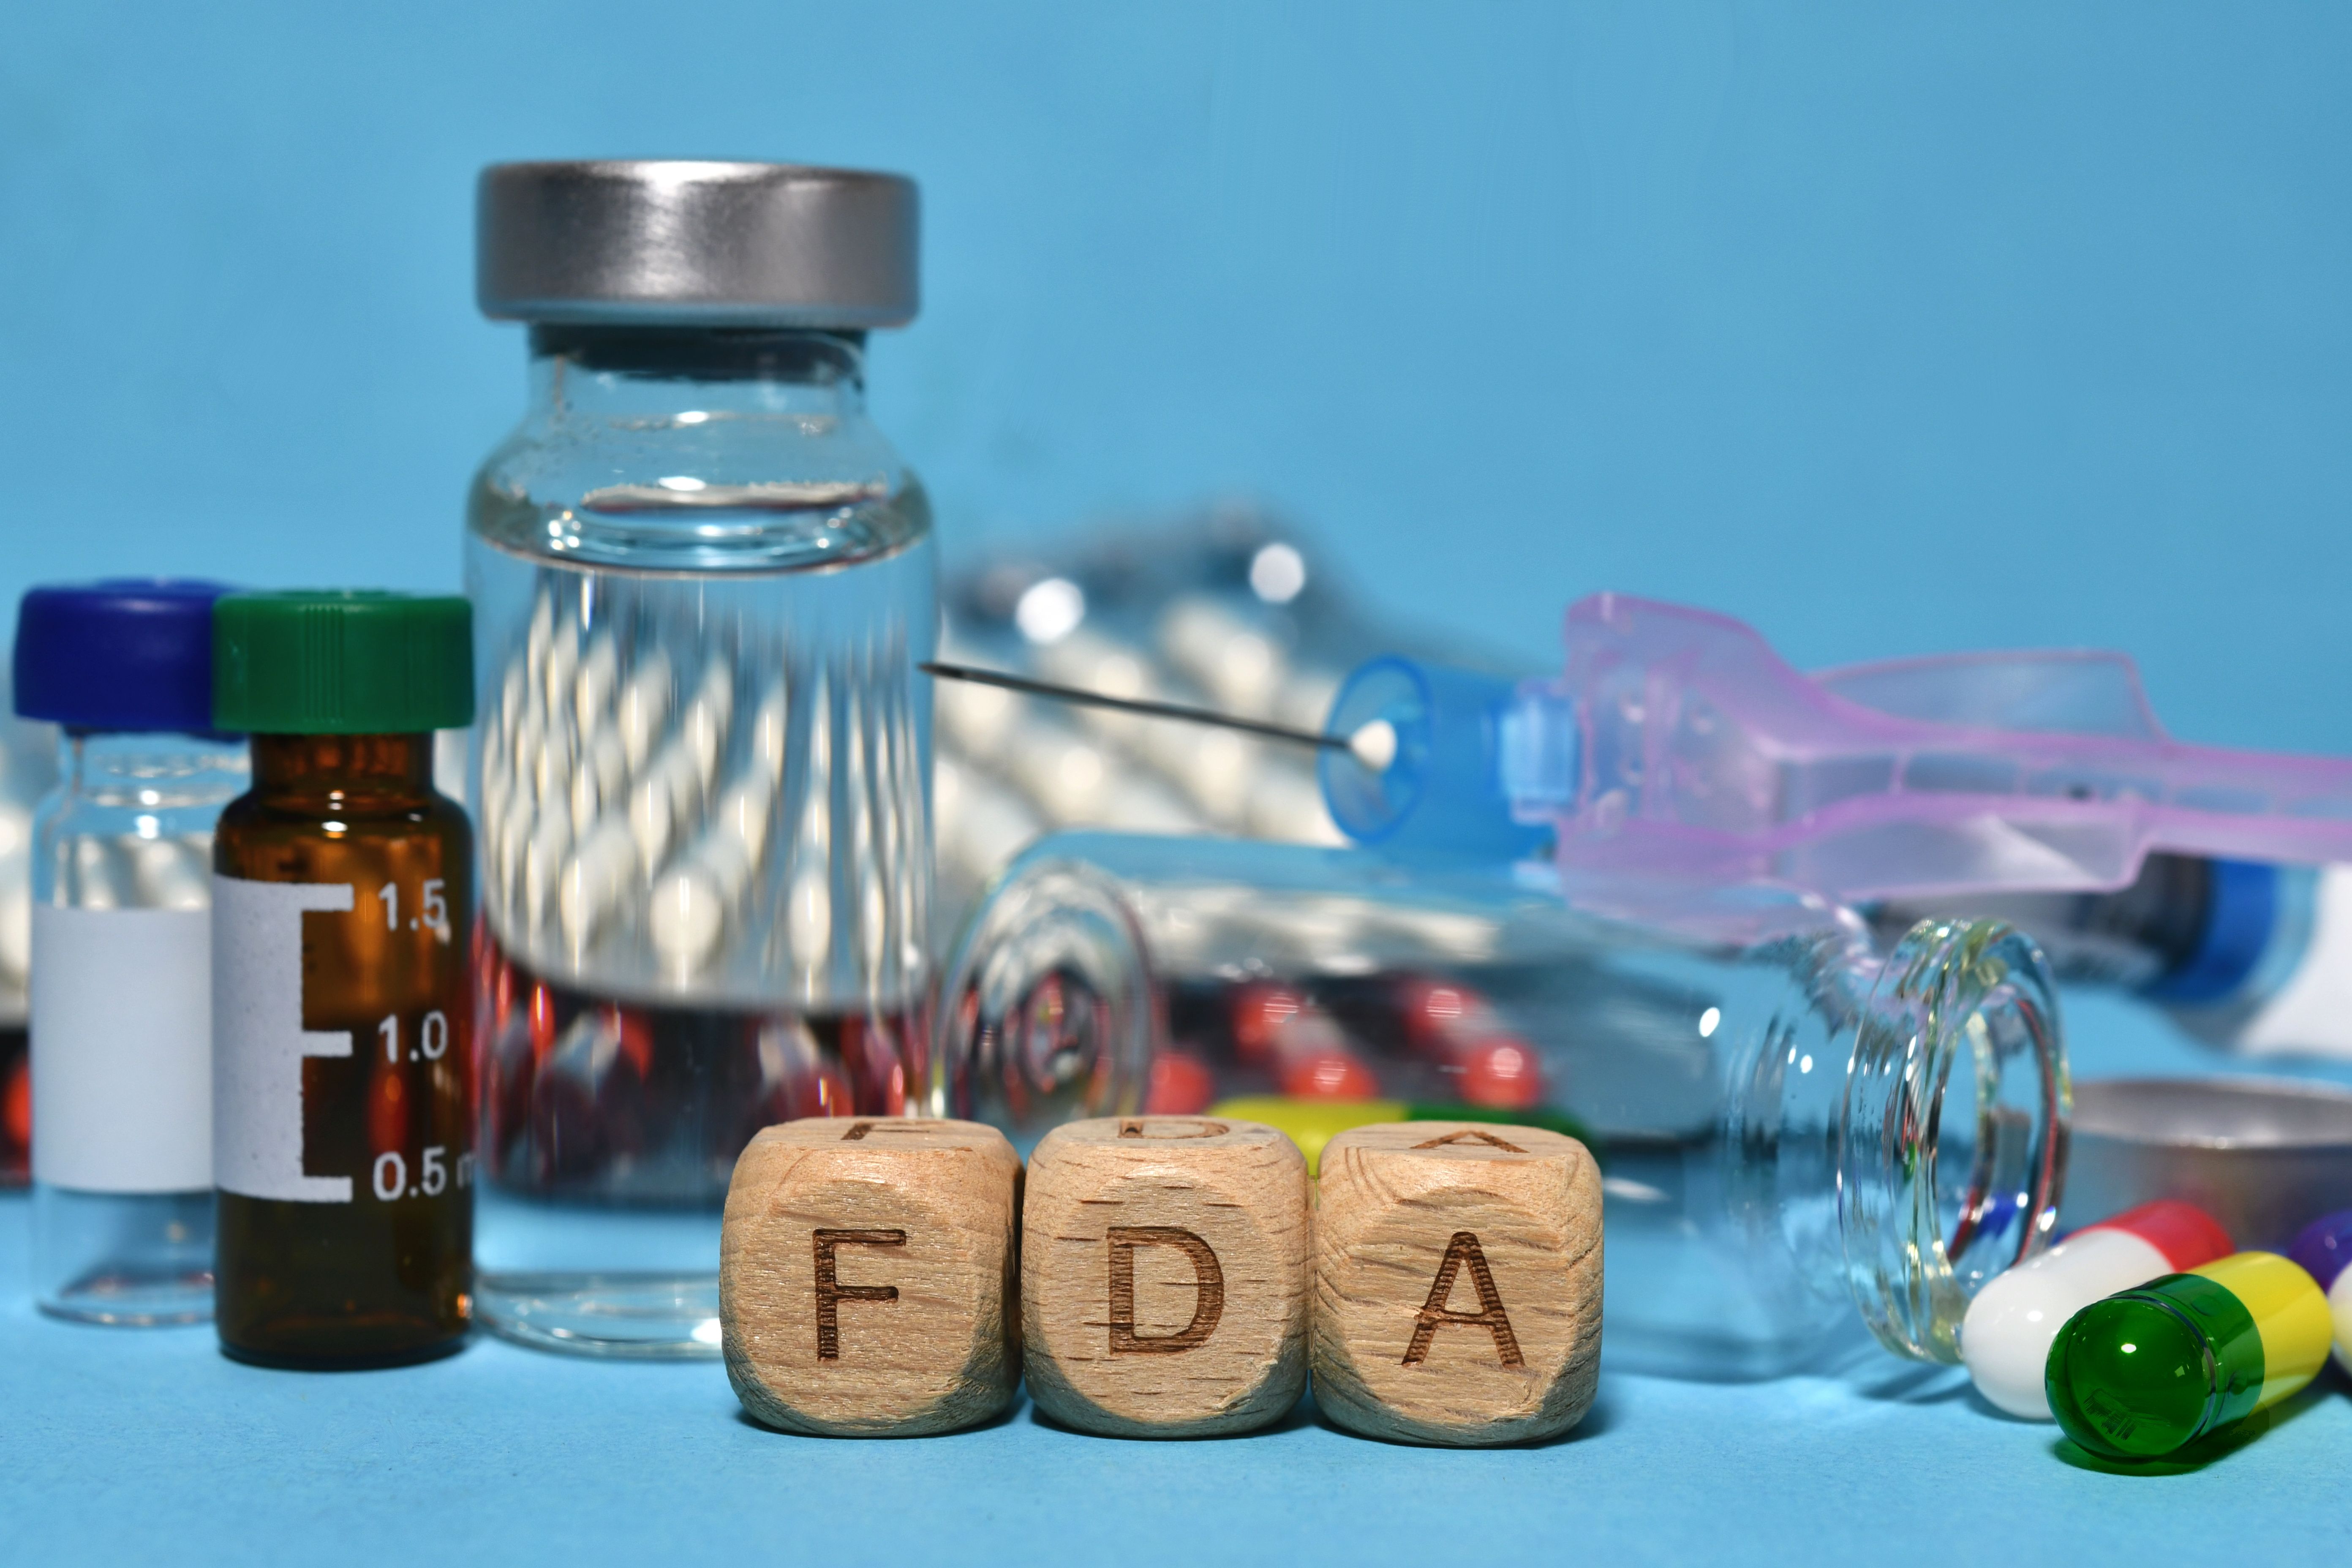 FDA approval | Image Credit: MargJohnsonVA - stock.adobe.com